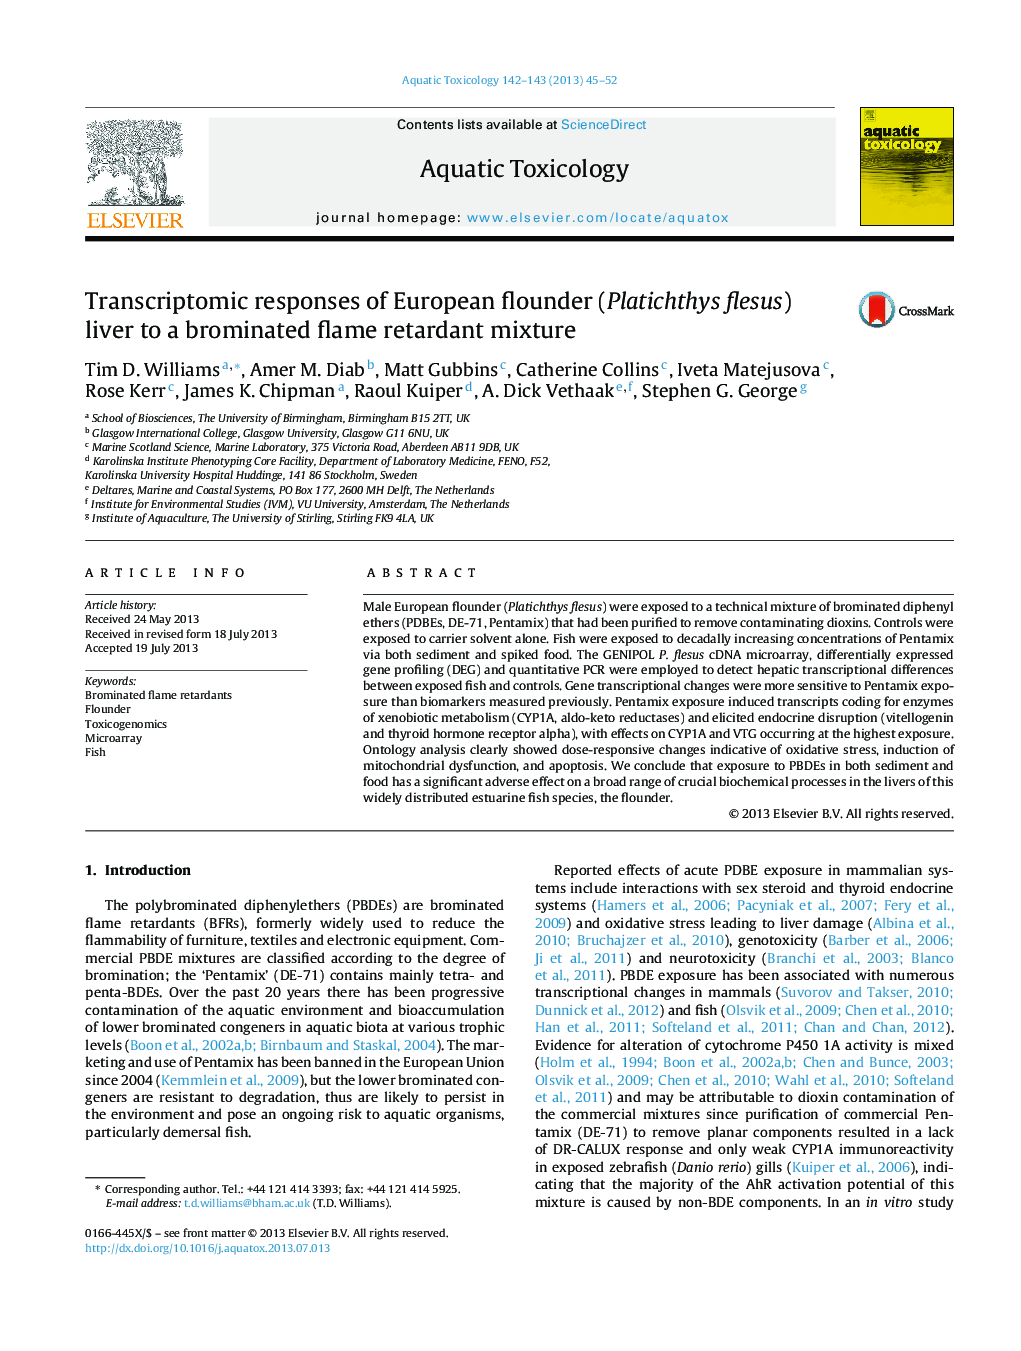 Transcriptomic responses of European flounder (Platichthys flesus) liver to a brominated flame retardant mixture